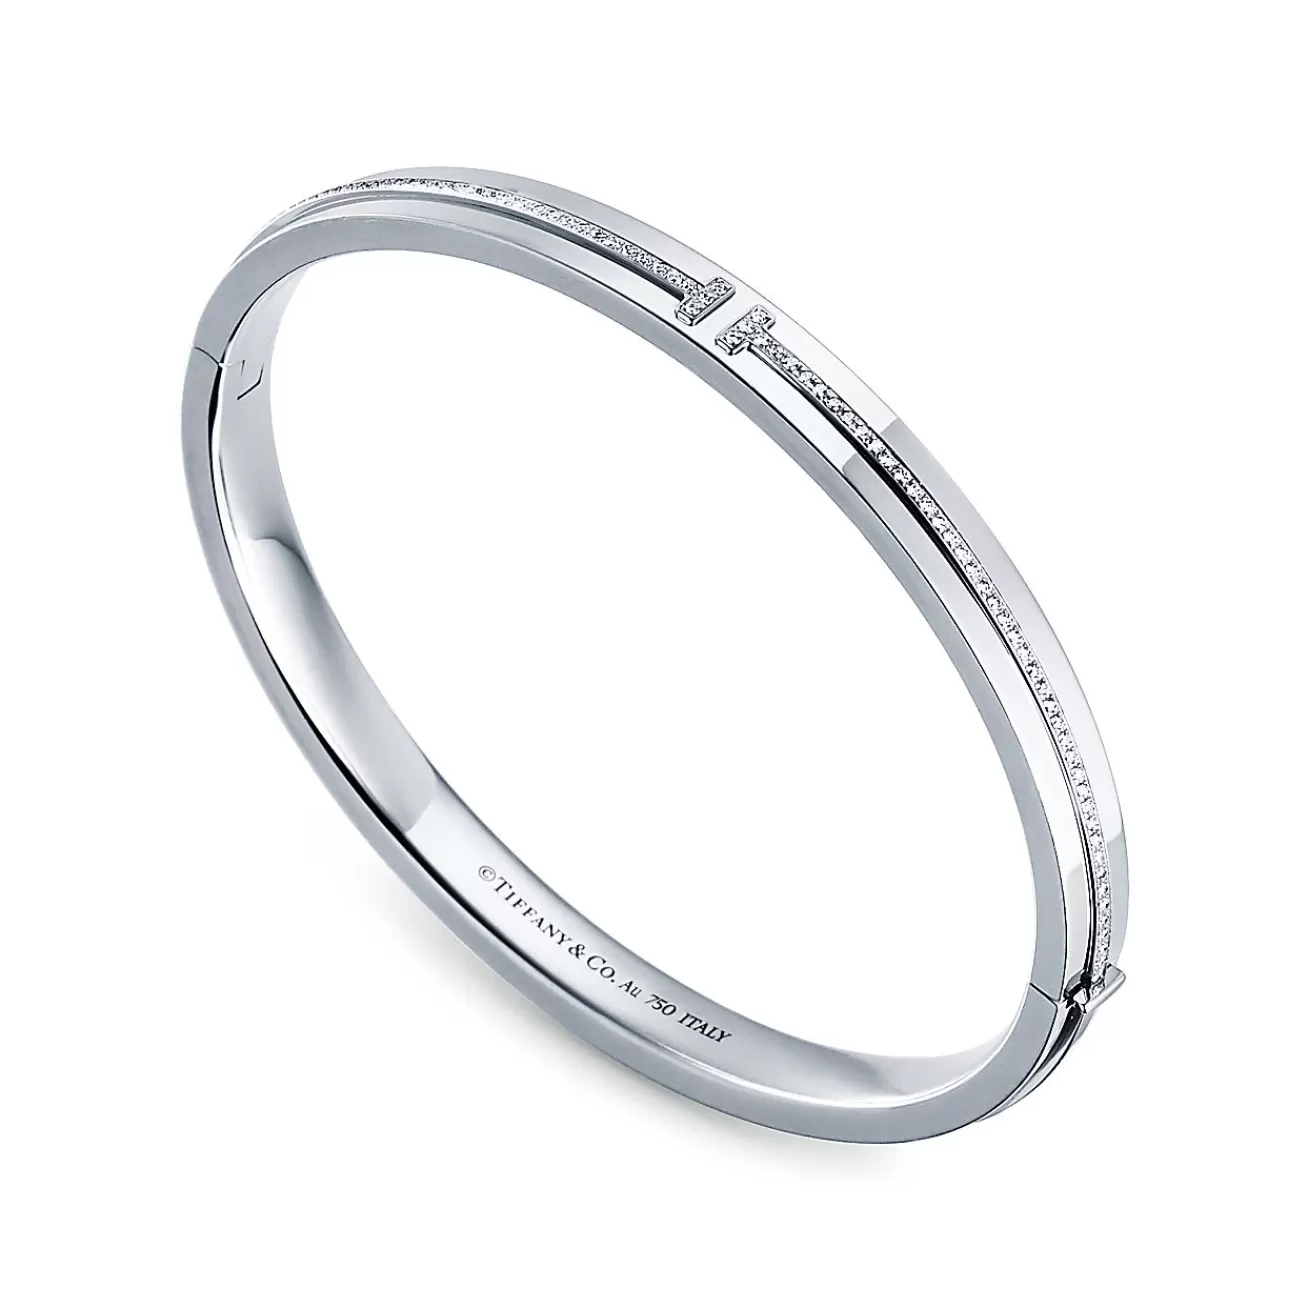 Tiffany & Co. Tiffany T diamond hinged bangle in 18k white gold, medium. | ^ Bracelets | Diamond Jewelry